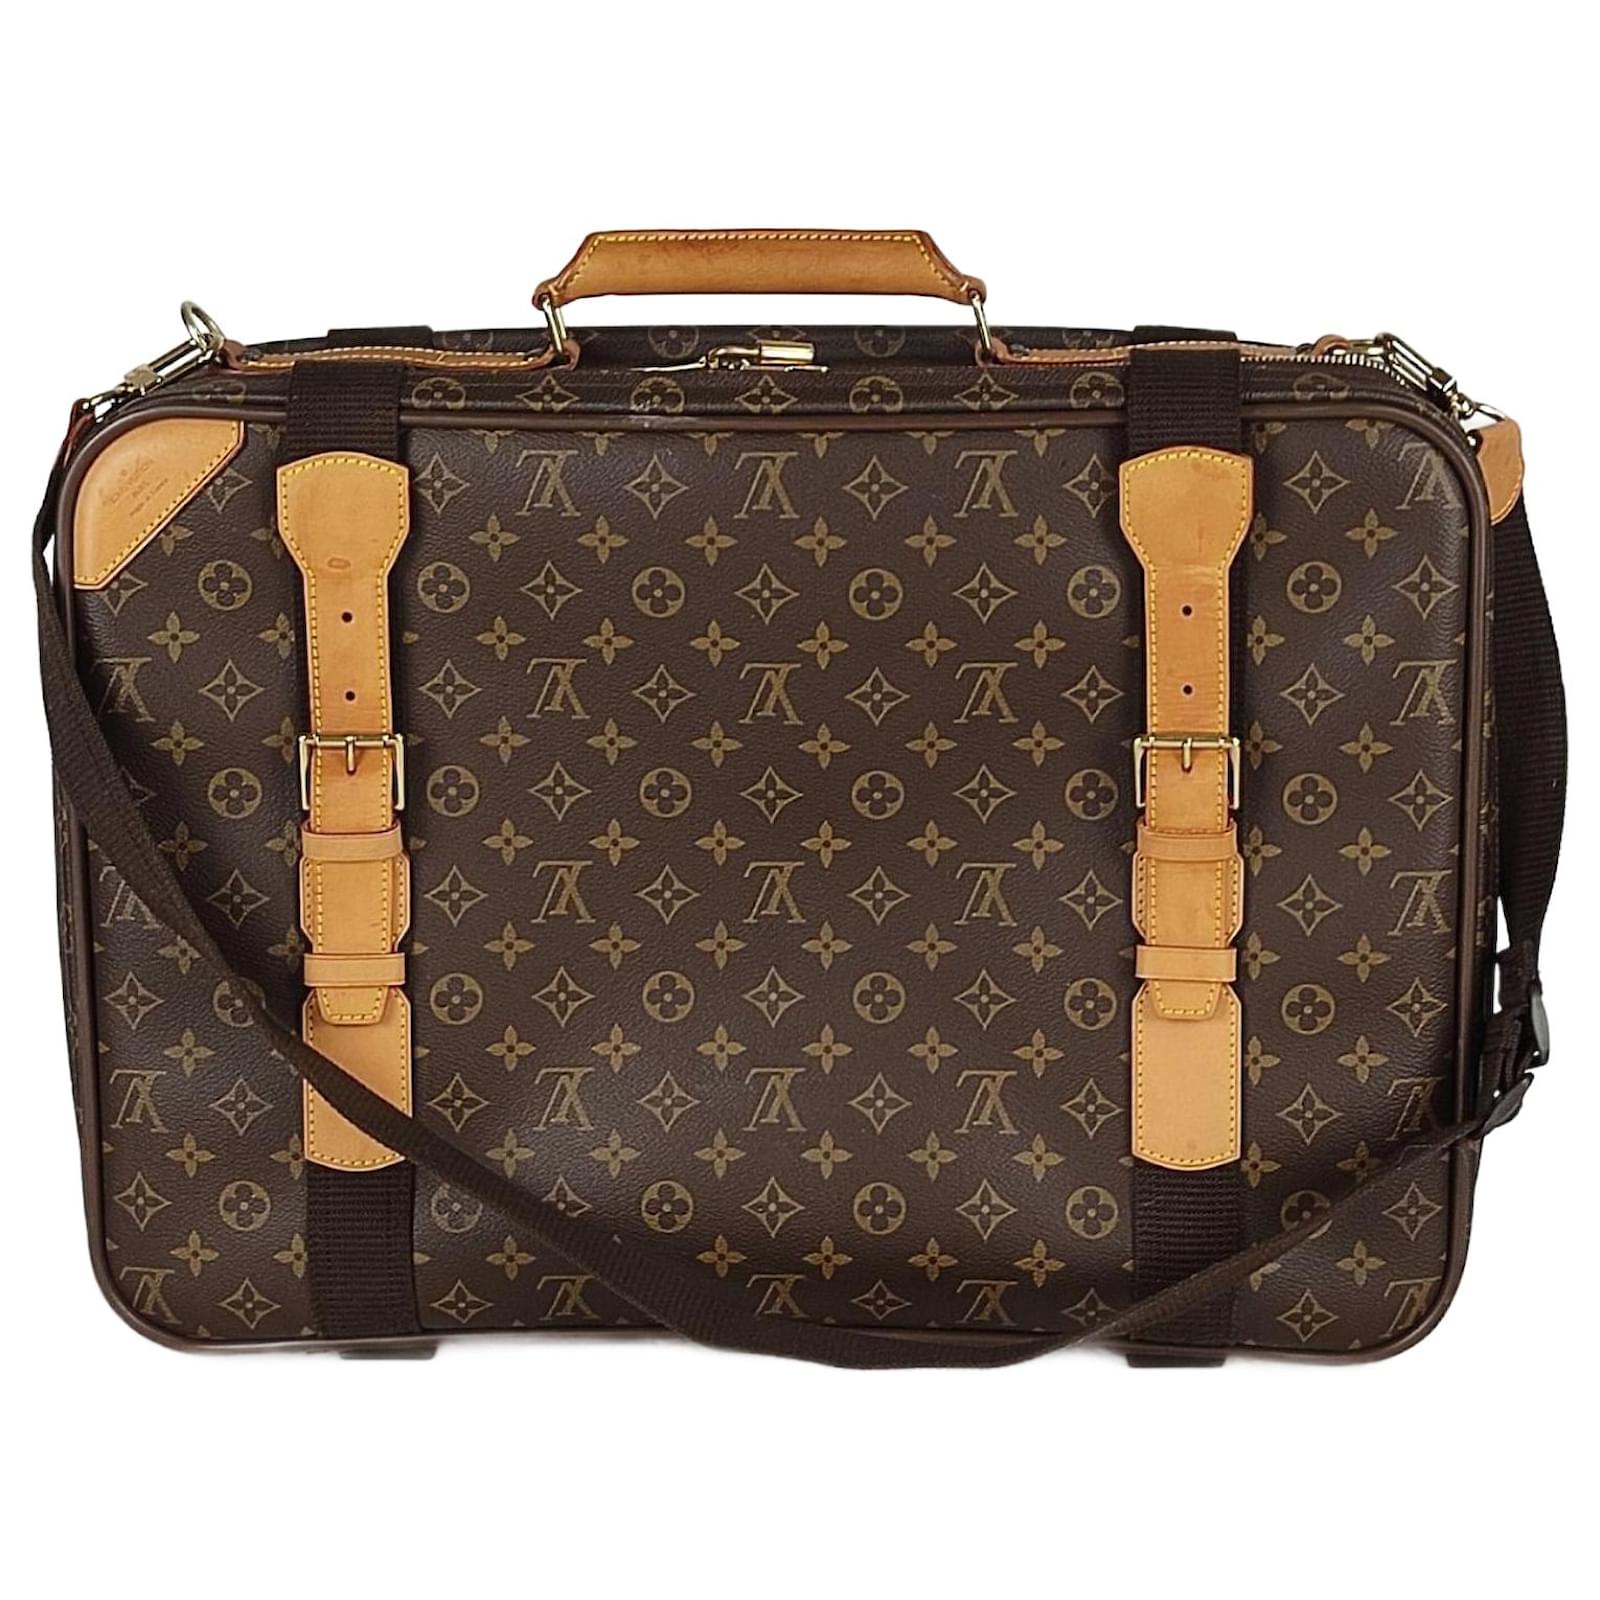 Louis Vuitton suitcase Satellite 50 monogram with shoulder strap